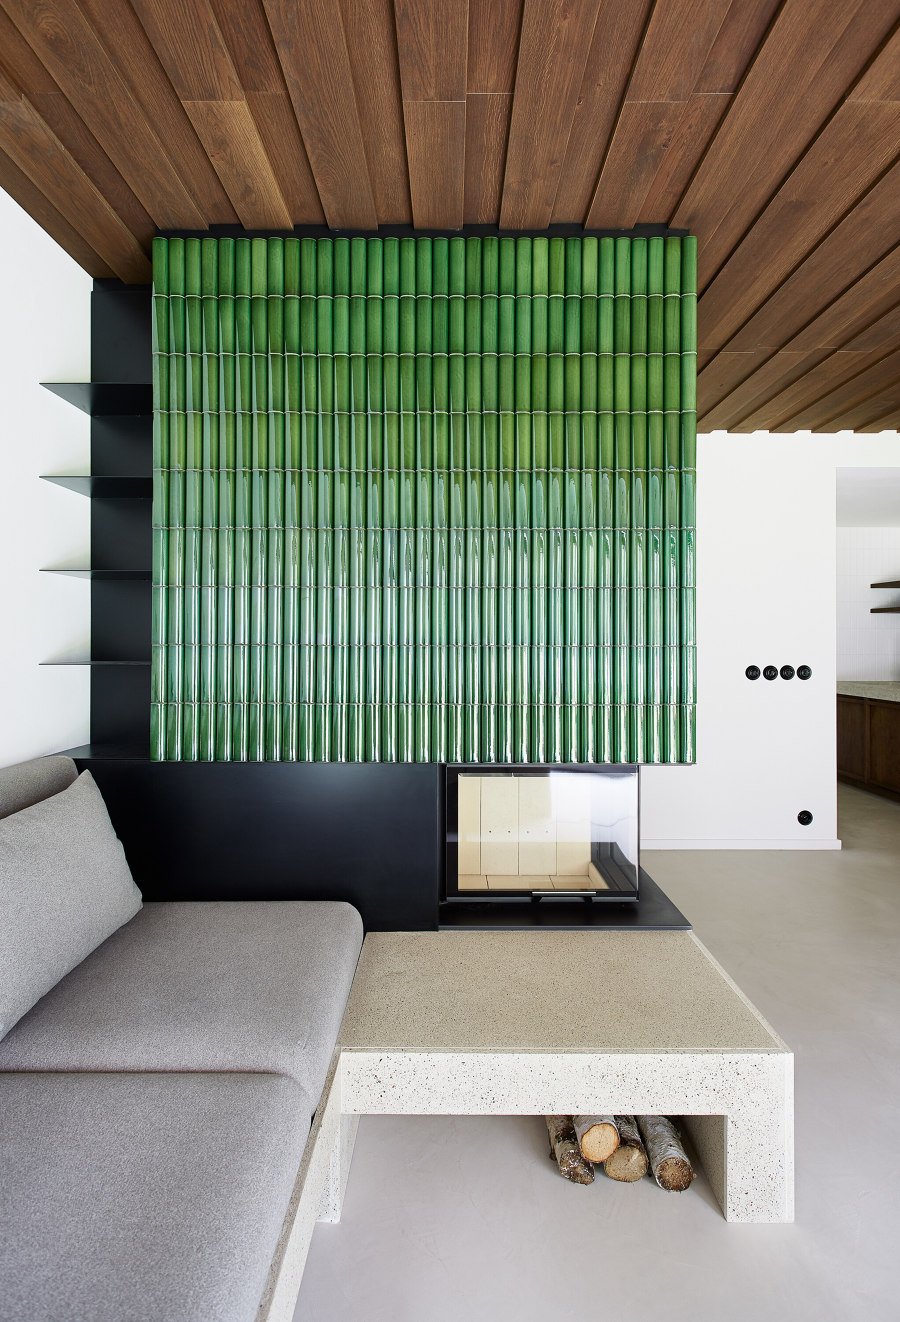 Weekend Apartment in the Jizera Mountains by Markéta Bromová architekti | Living space